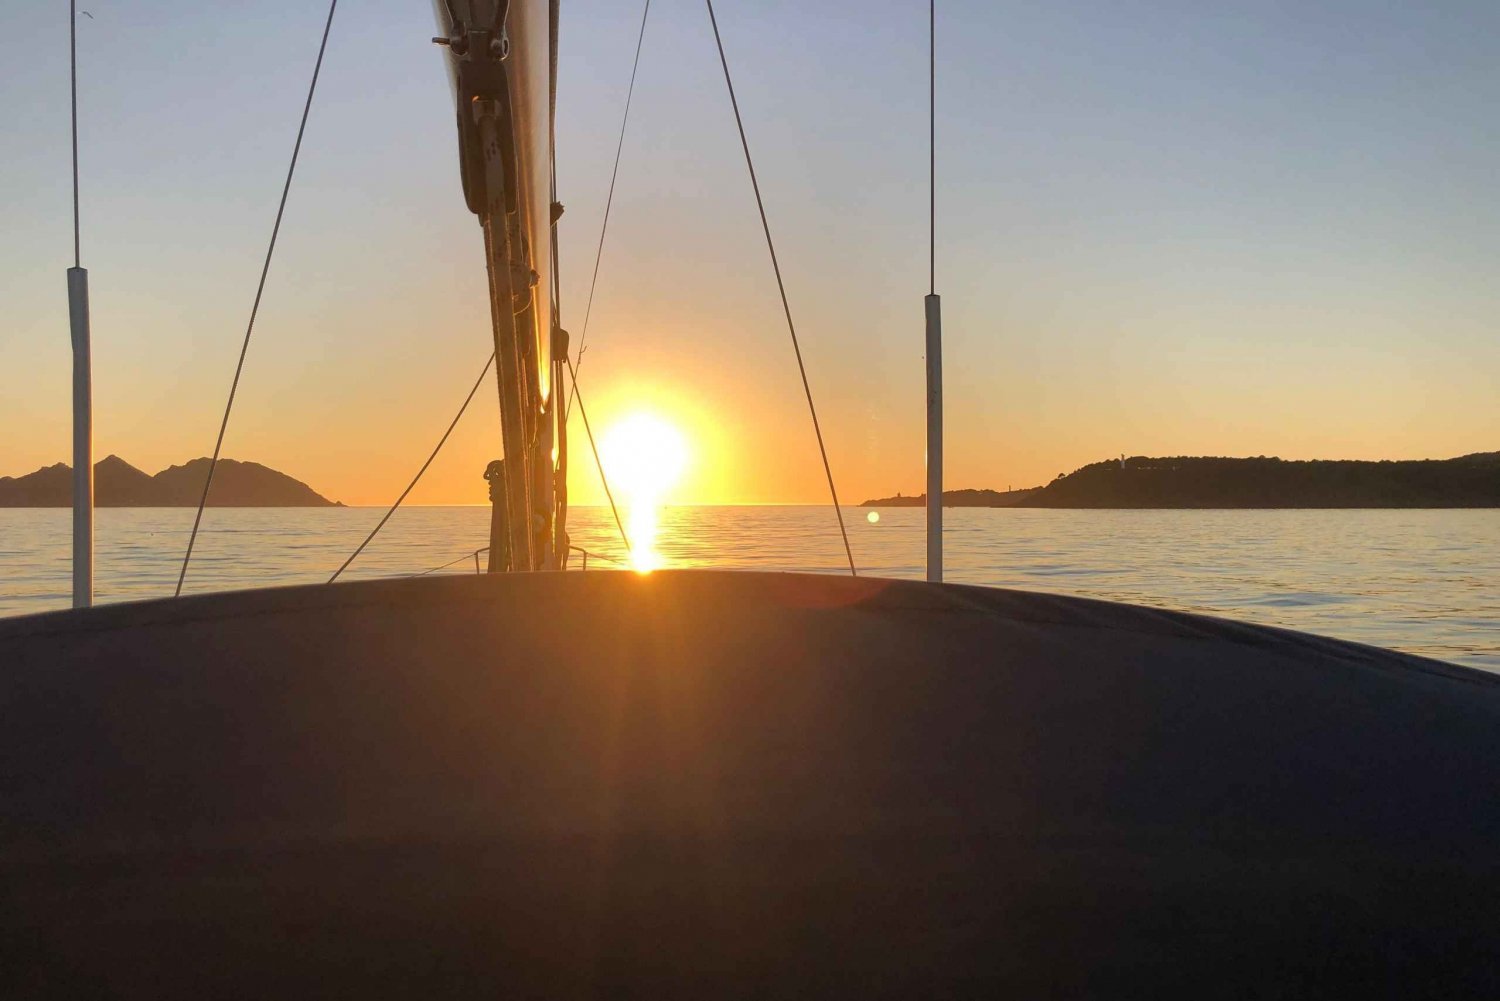 Sunset on a luxury sailing yacht - Lagos - Algarve